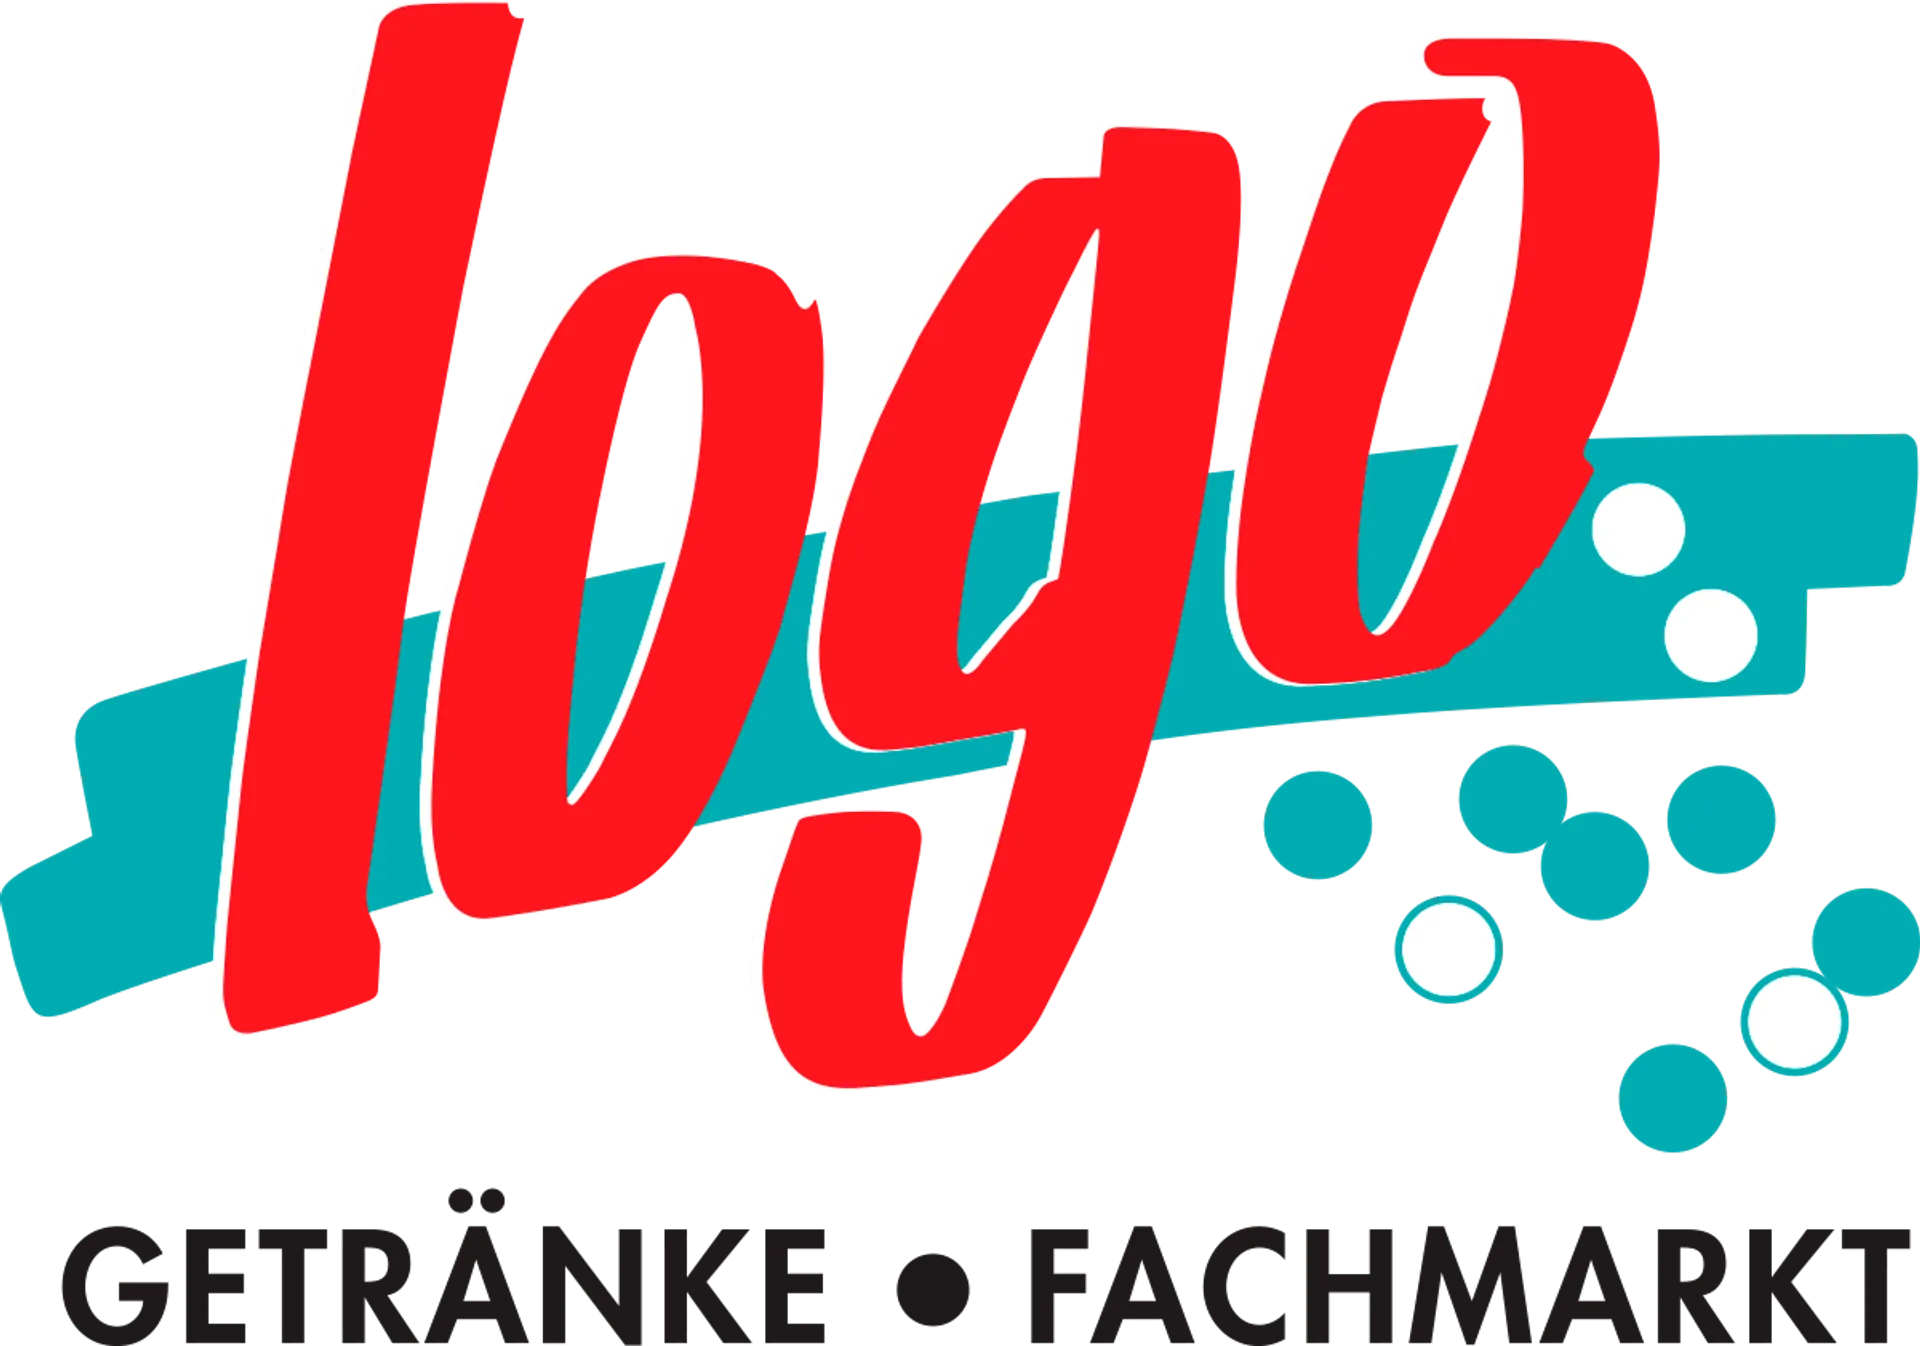 LOGO GETRÄNKEMARKT logo